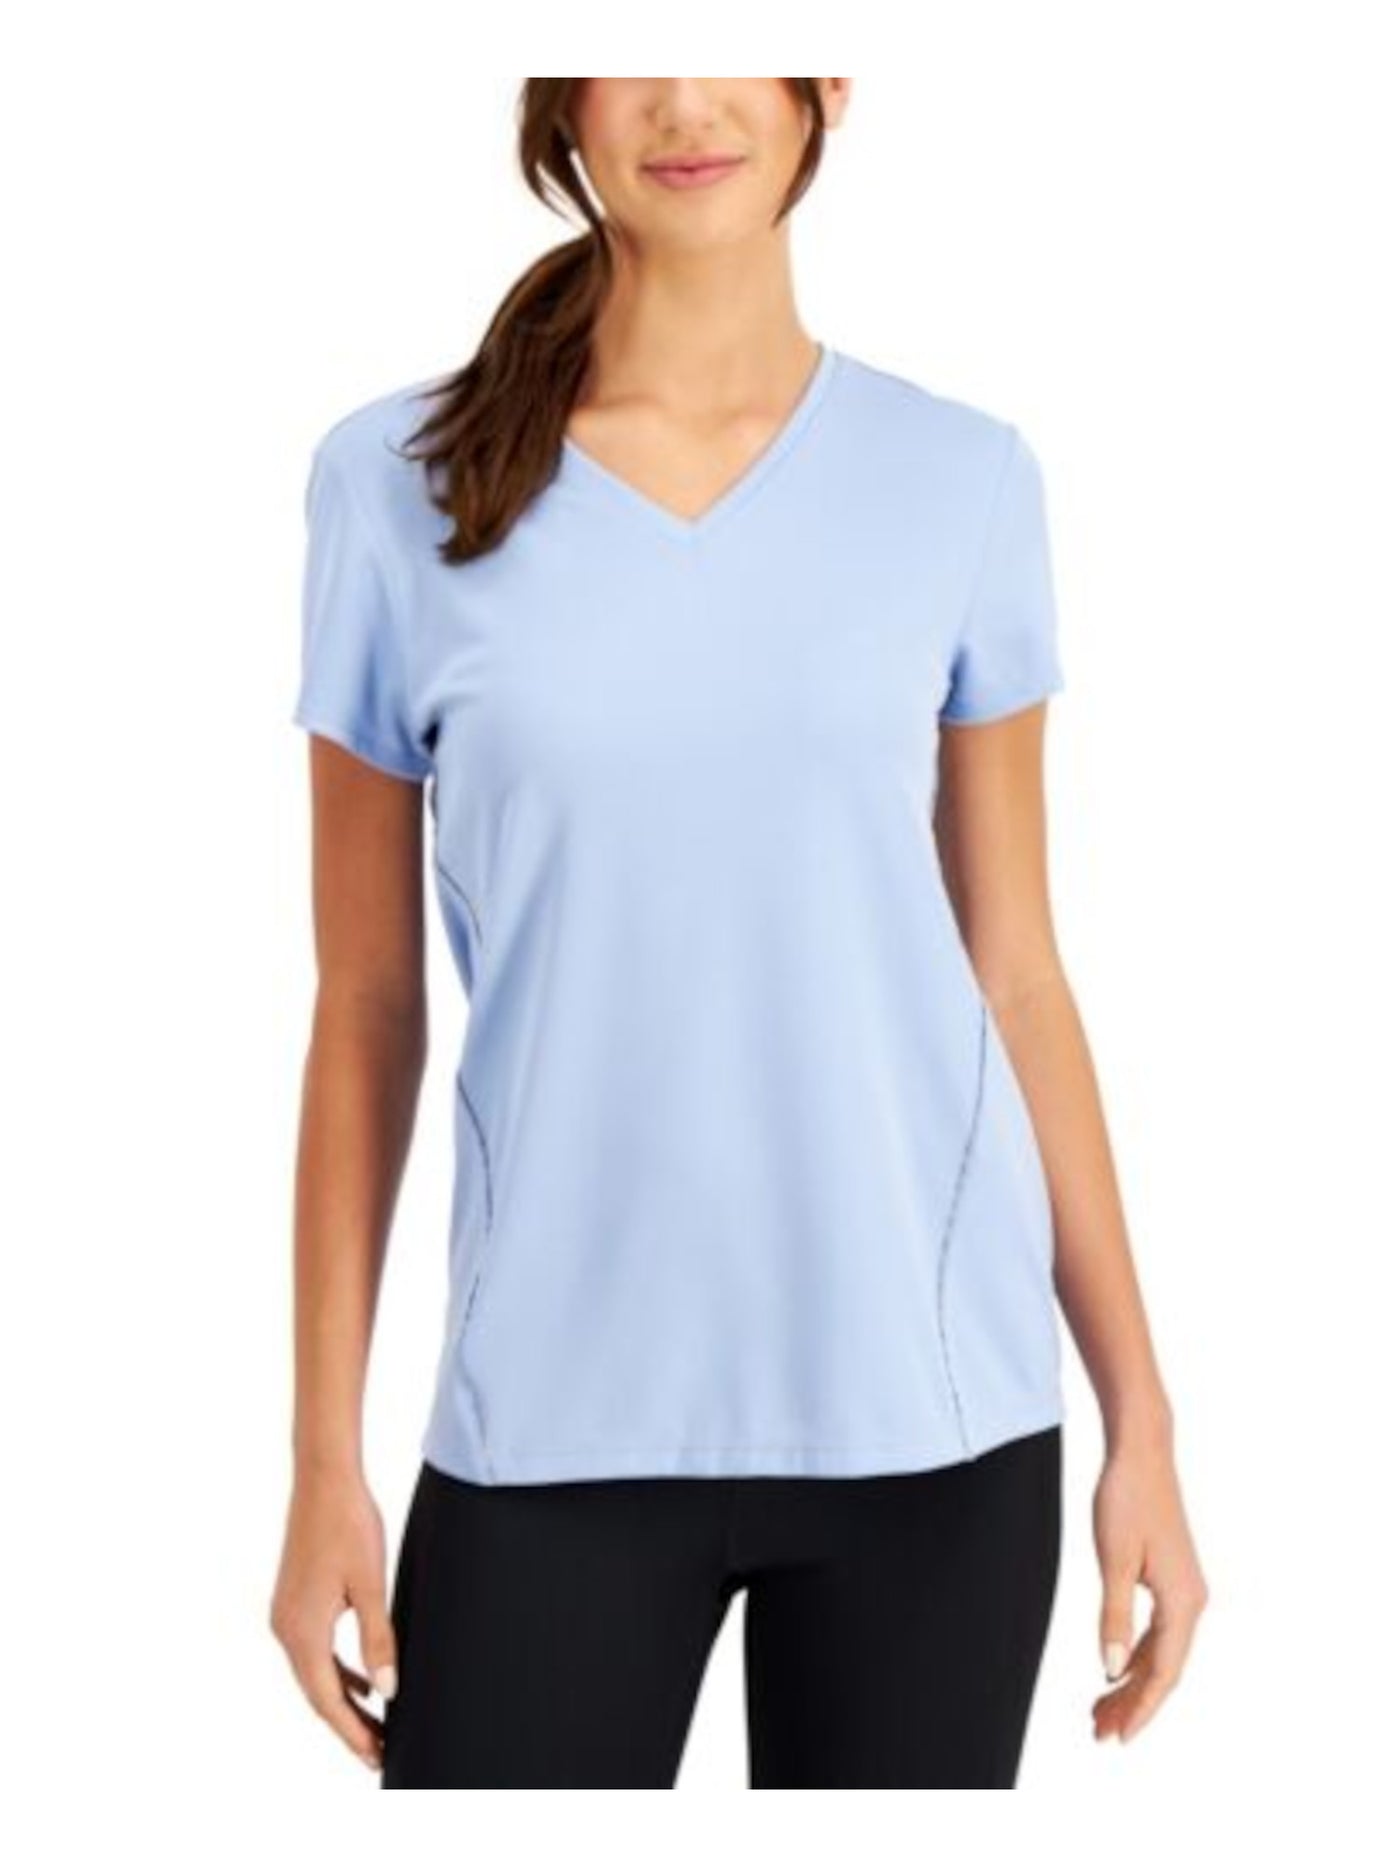 IDEOLOGY Womens Light Blue Moisture Wicking Textured Stretch Reflective Short Sleeve V Neck Active Wear T-Shirt L